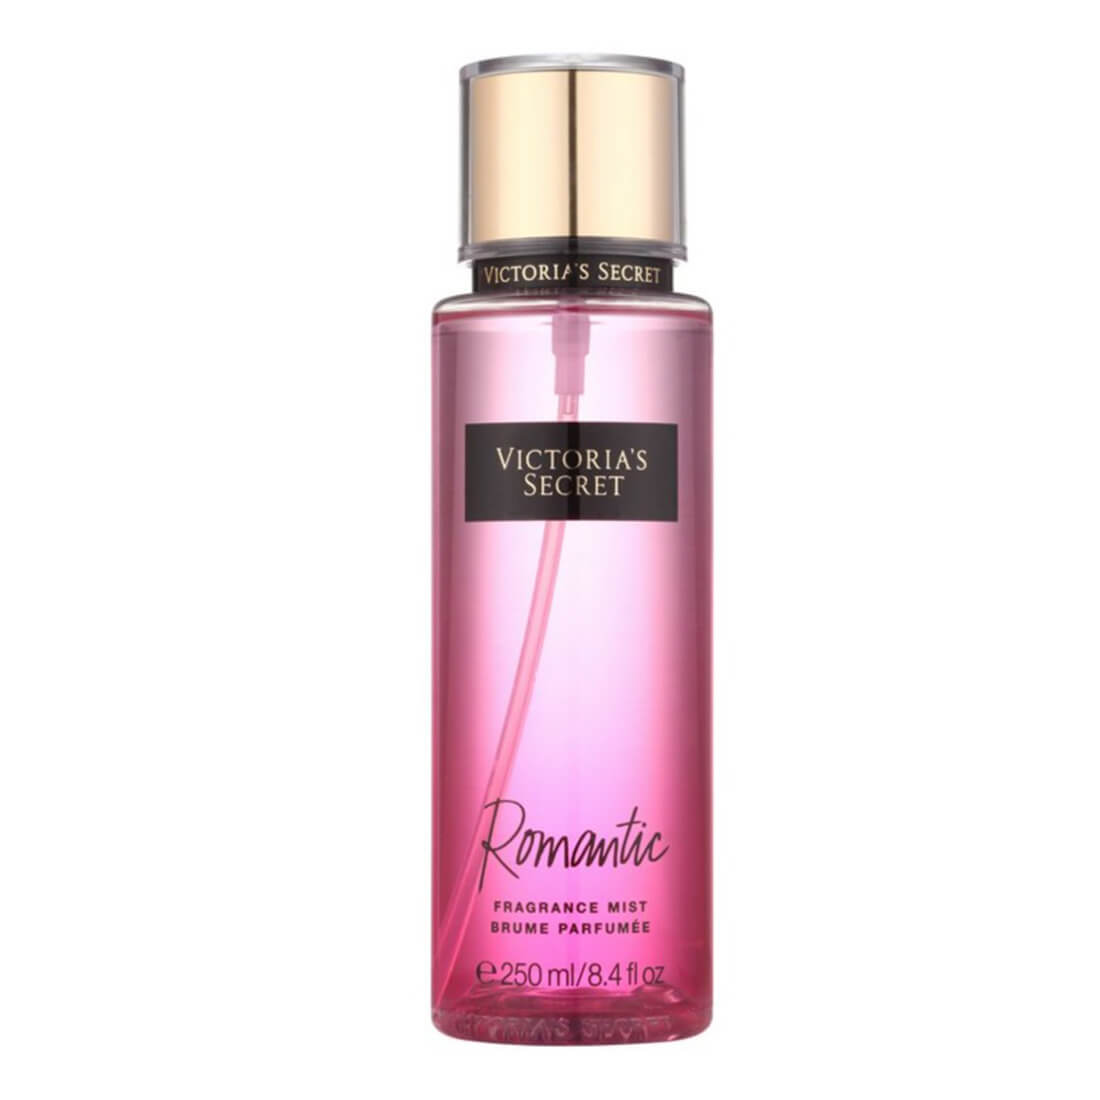 Bare Vanilla Splash by Victoria's Secret » Reviews & Perfume Facts